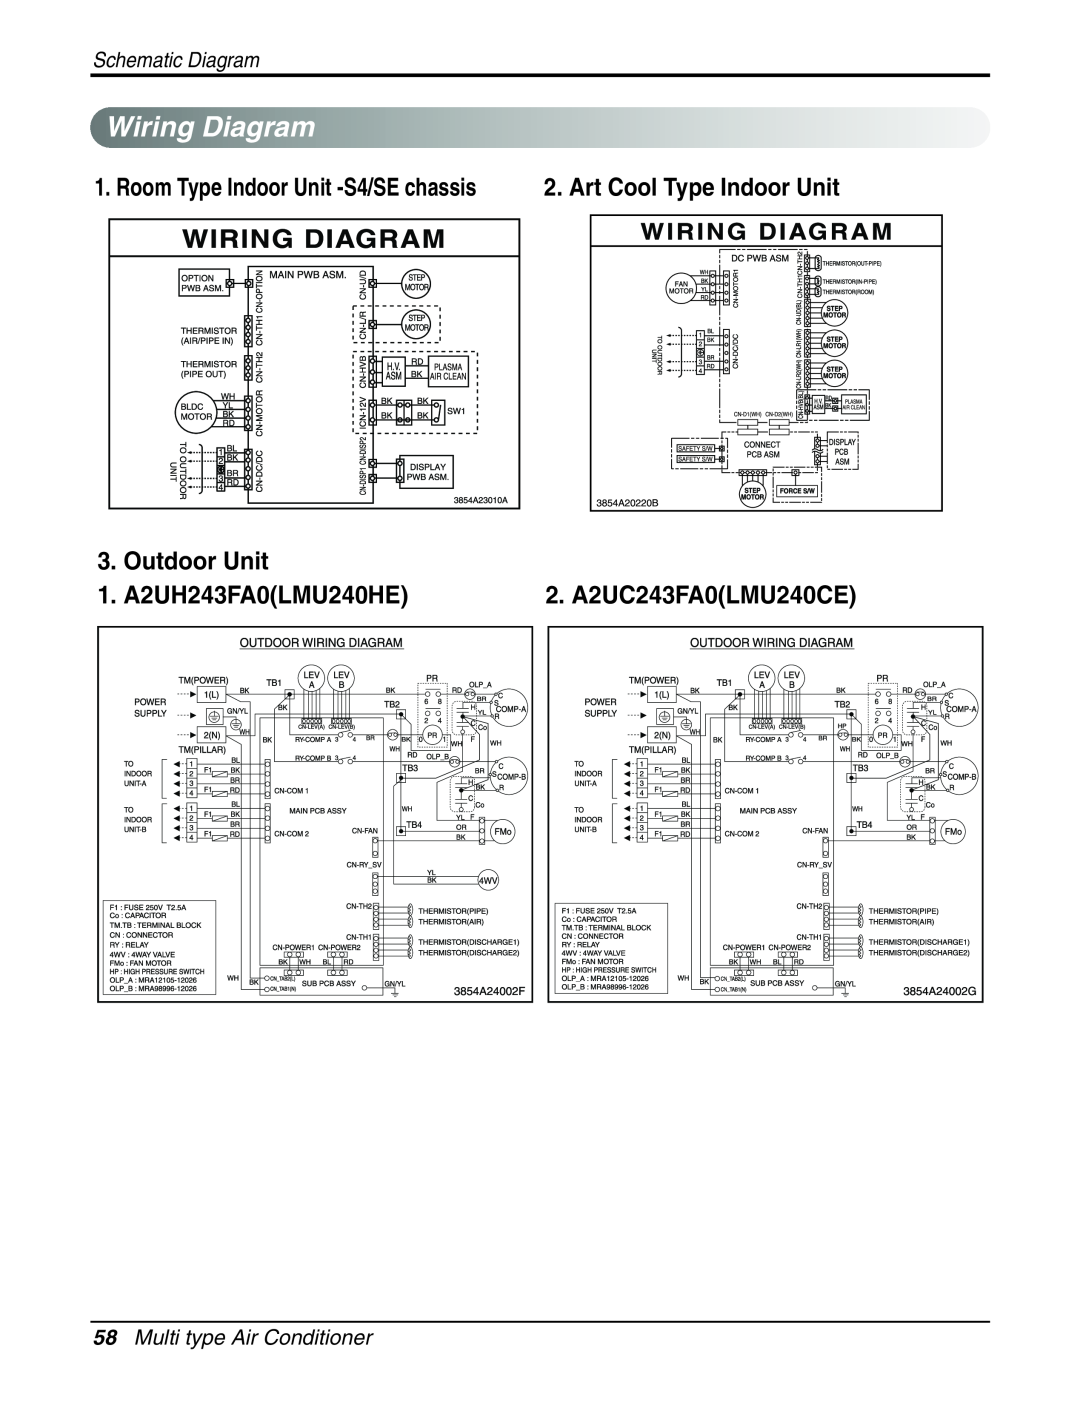 LG Electronics AMNH123DEA0 (LMN120HE) Wiring Diagram, Outdoor Unit, Art Cool Type Indoor Unit, 1. A2UH243FA0LMU240HE 